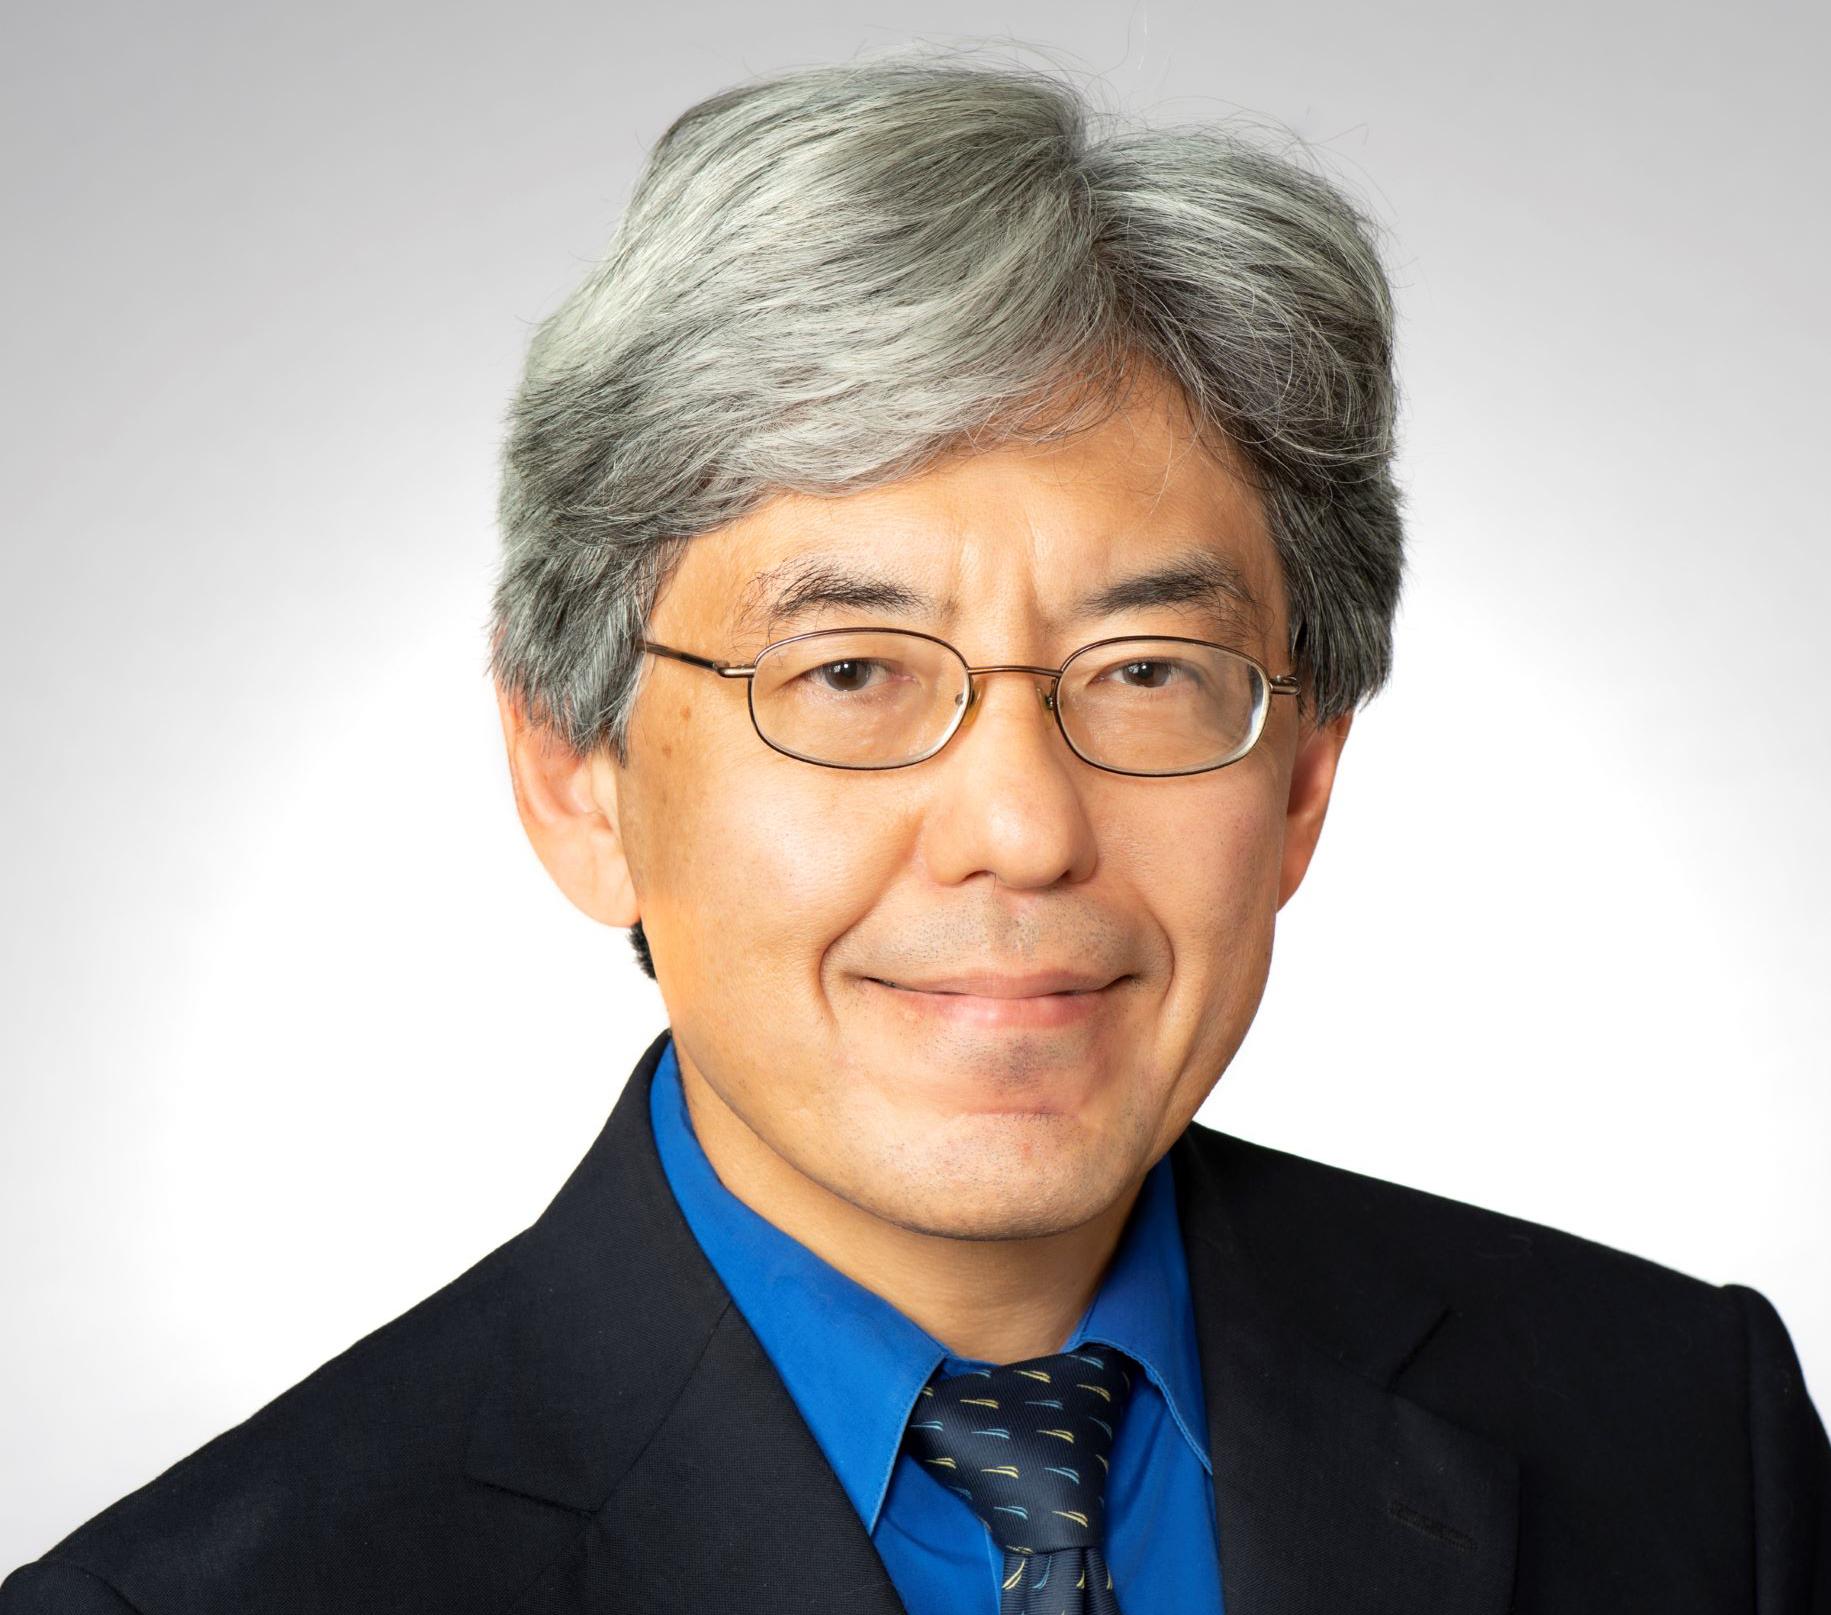 Portrait of Dr. Ohori